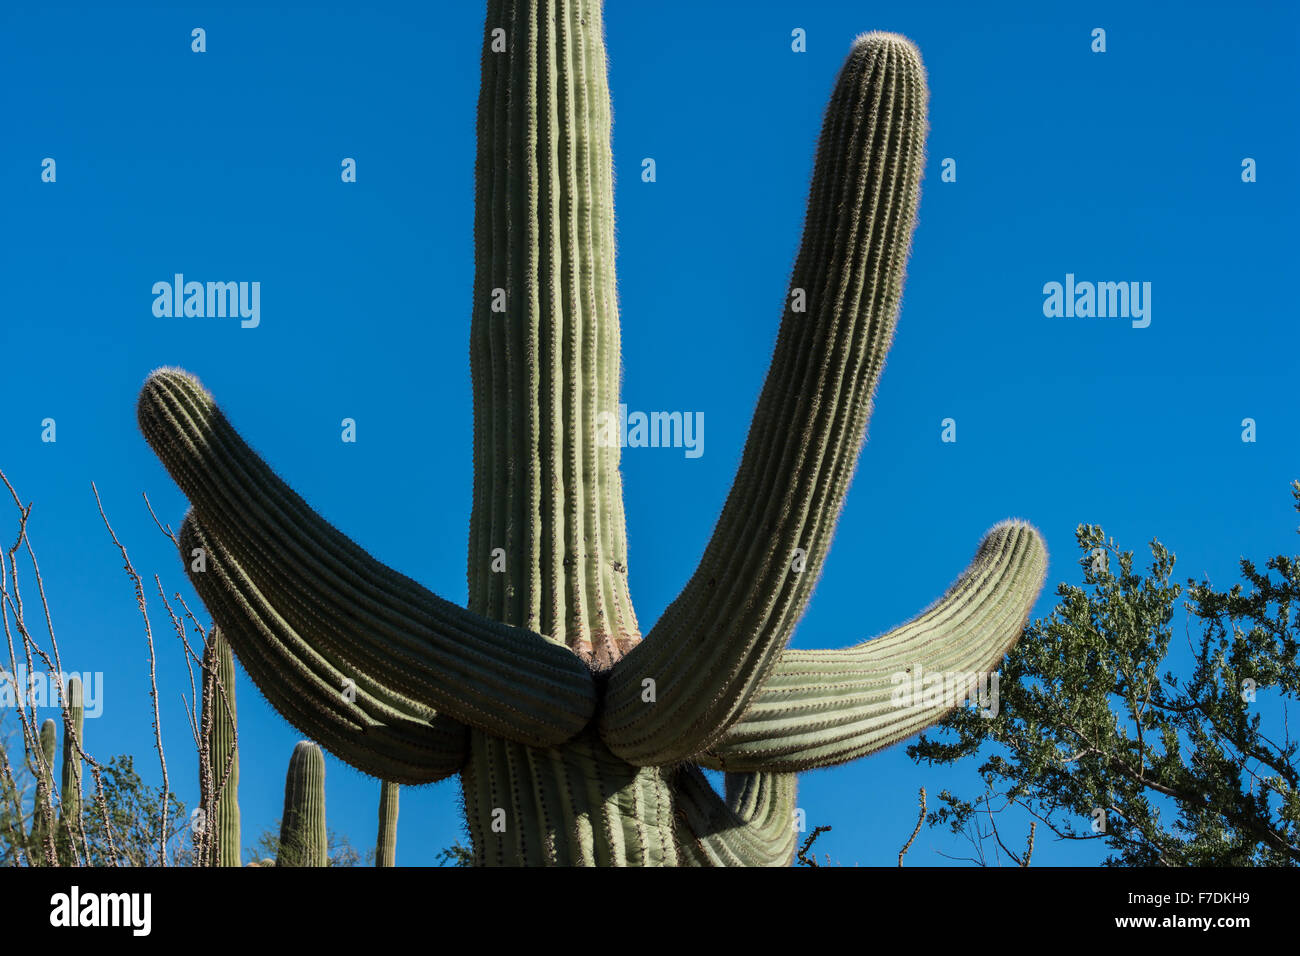 Branches of a giant Saguaro cactus (Carnegiea gigantea) at the Saguaro National Park, Tucson, Arizona, USA. Stock Photo